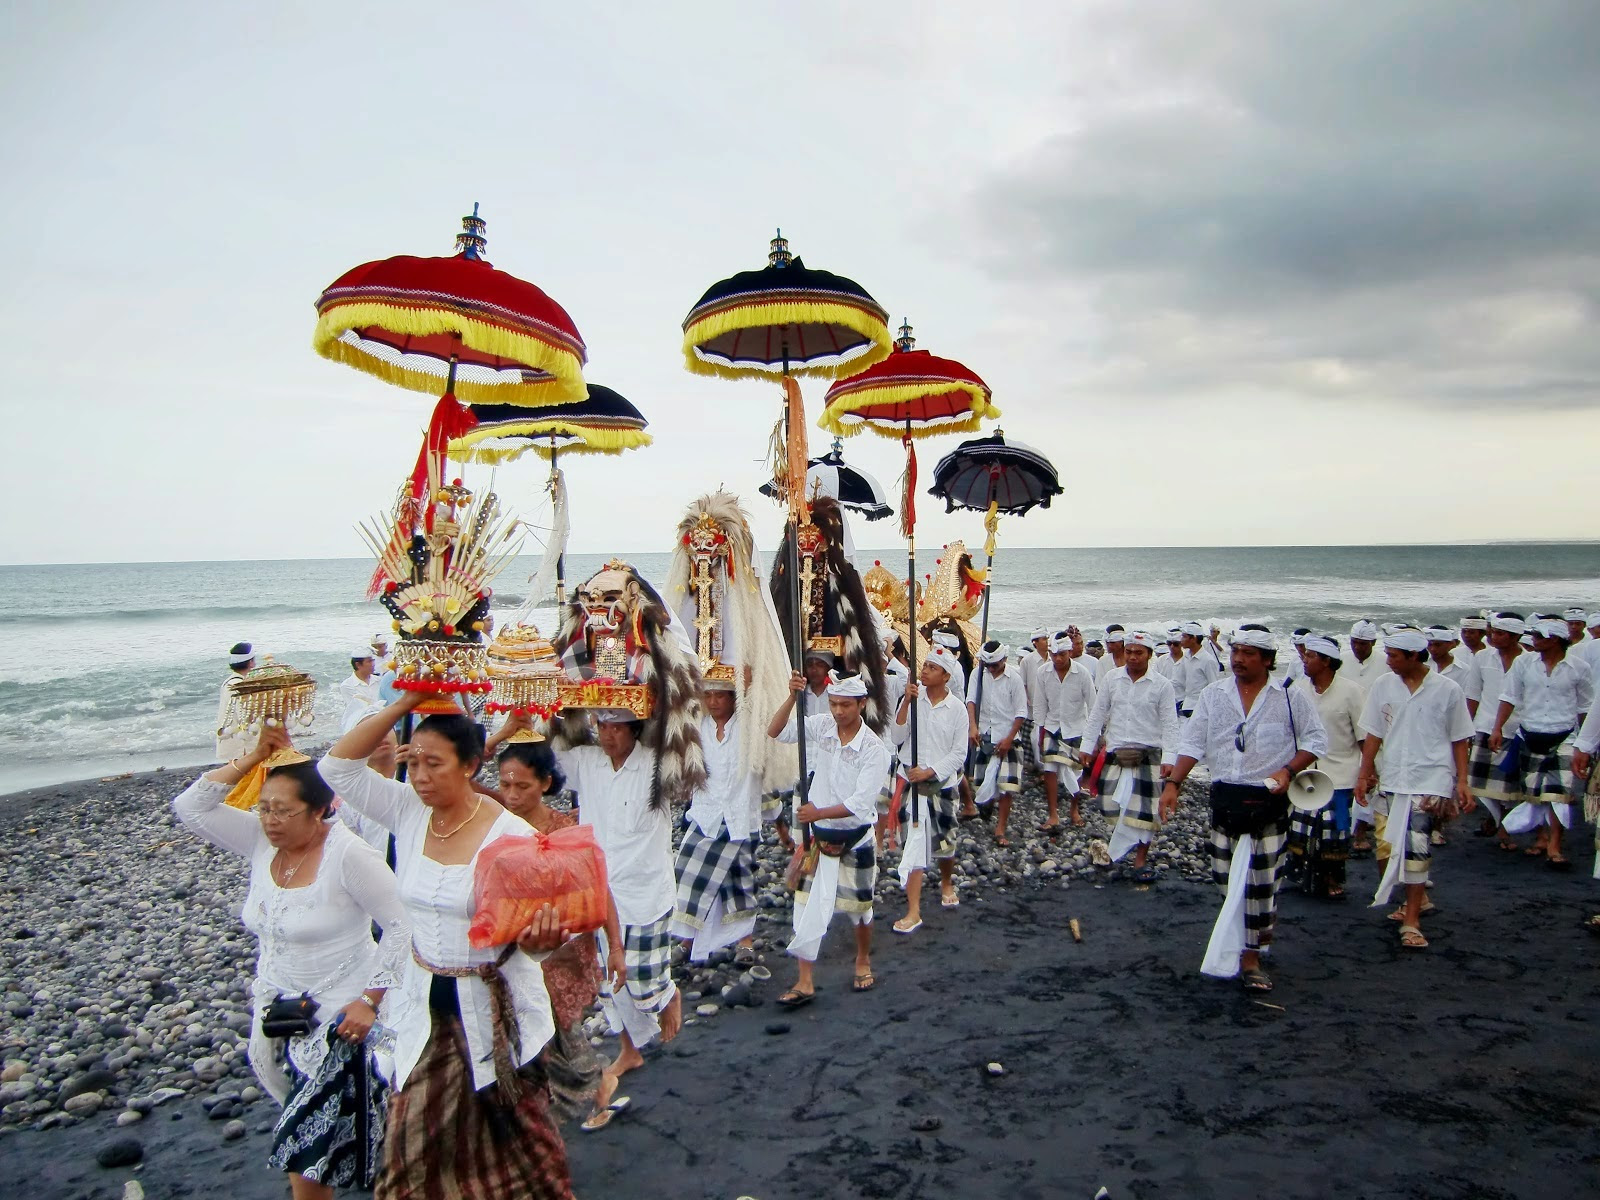 Hindus perform purification ceremony called Melasti Ceremony